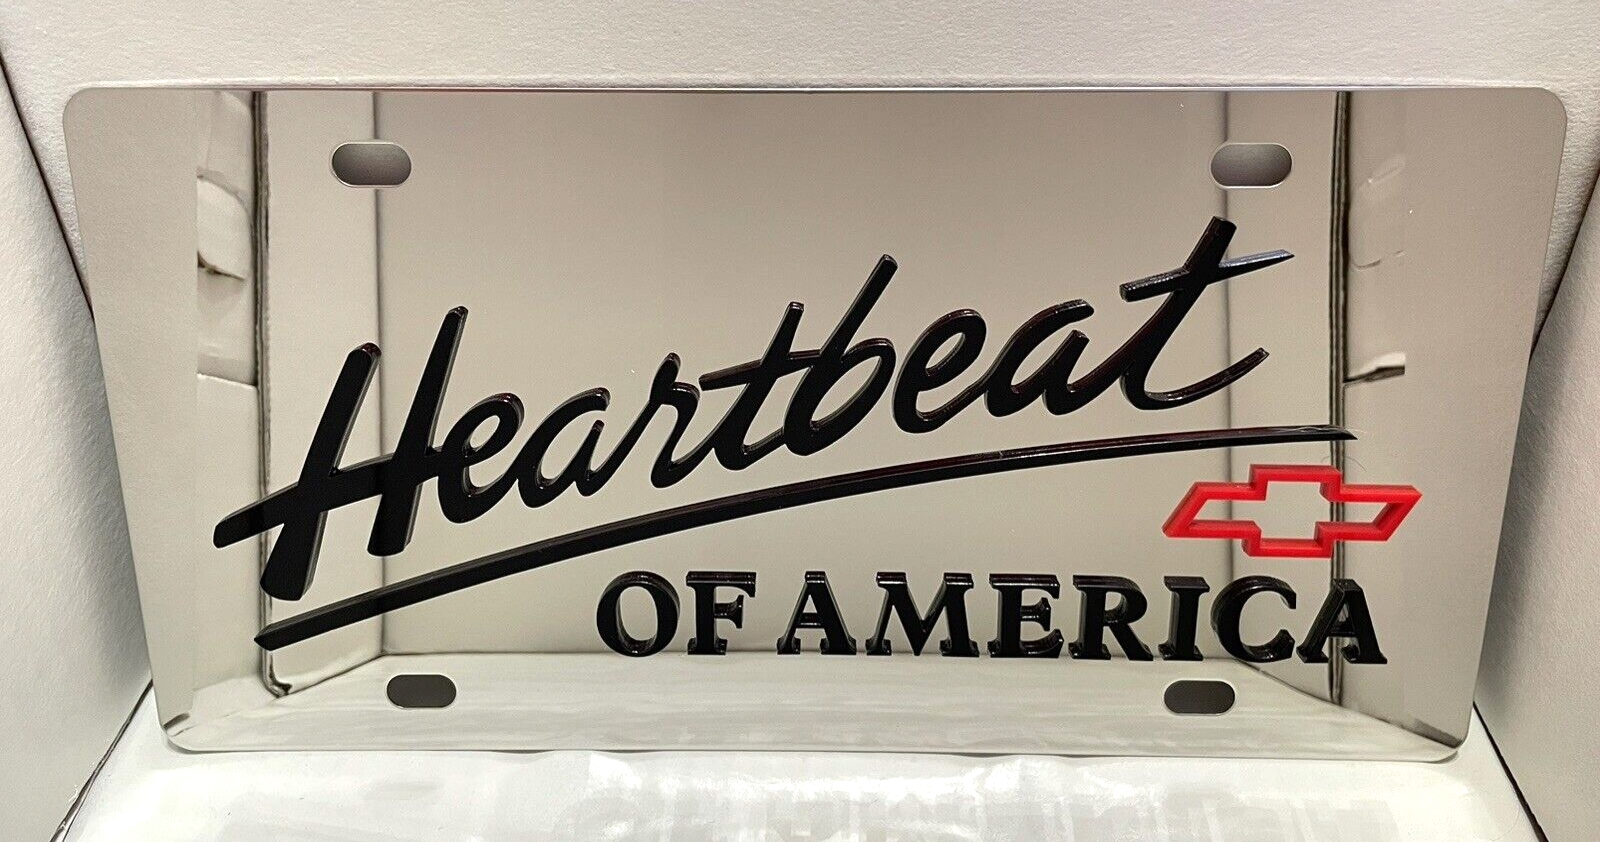 Chevrolet Heartbeat of America vanity license p...